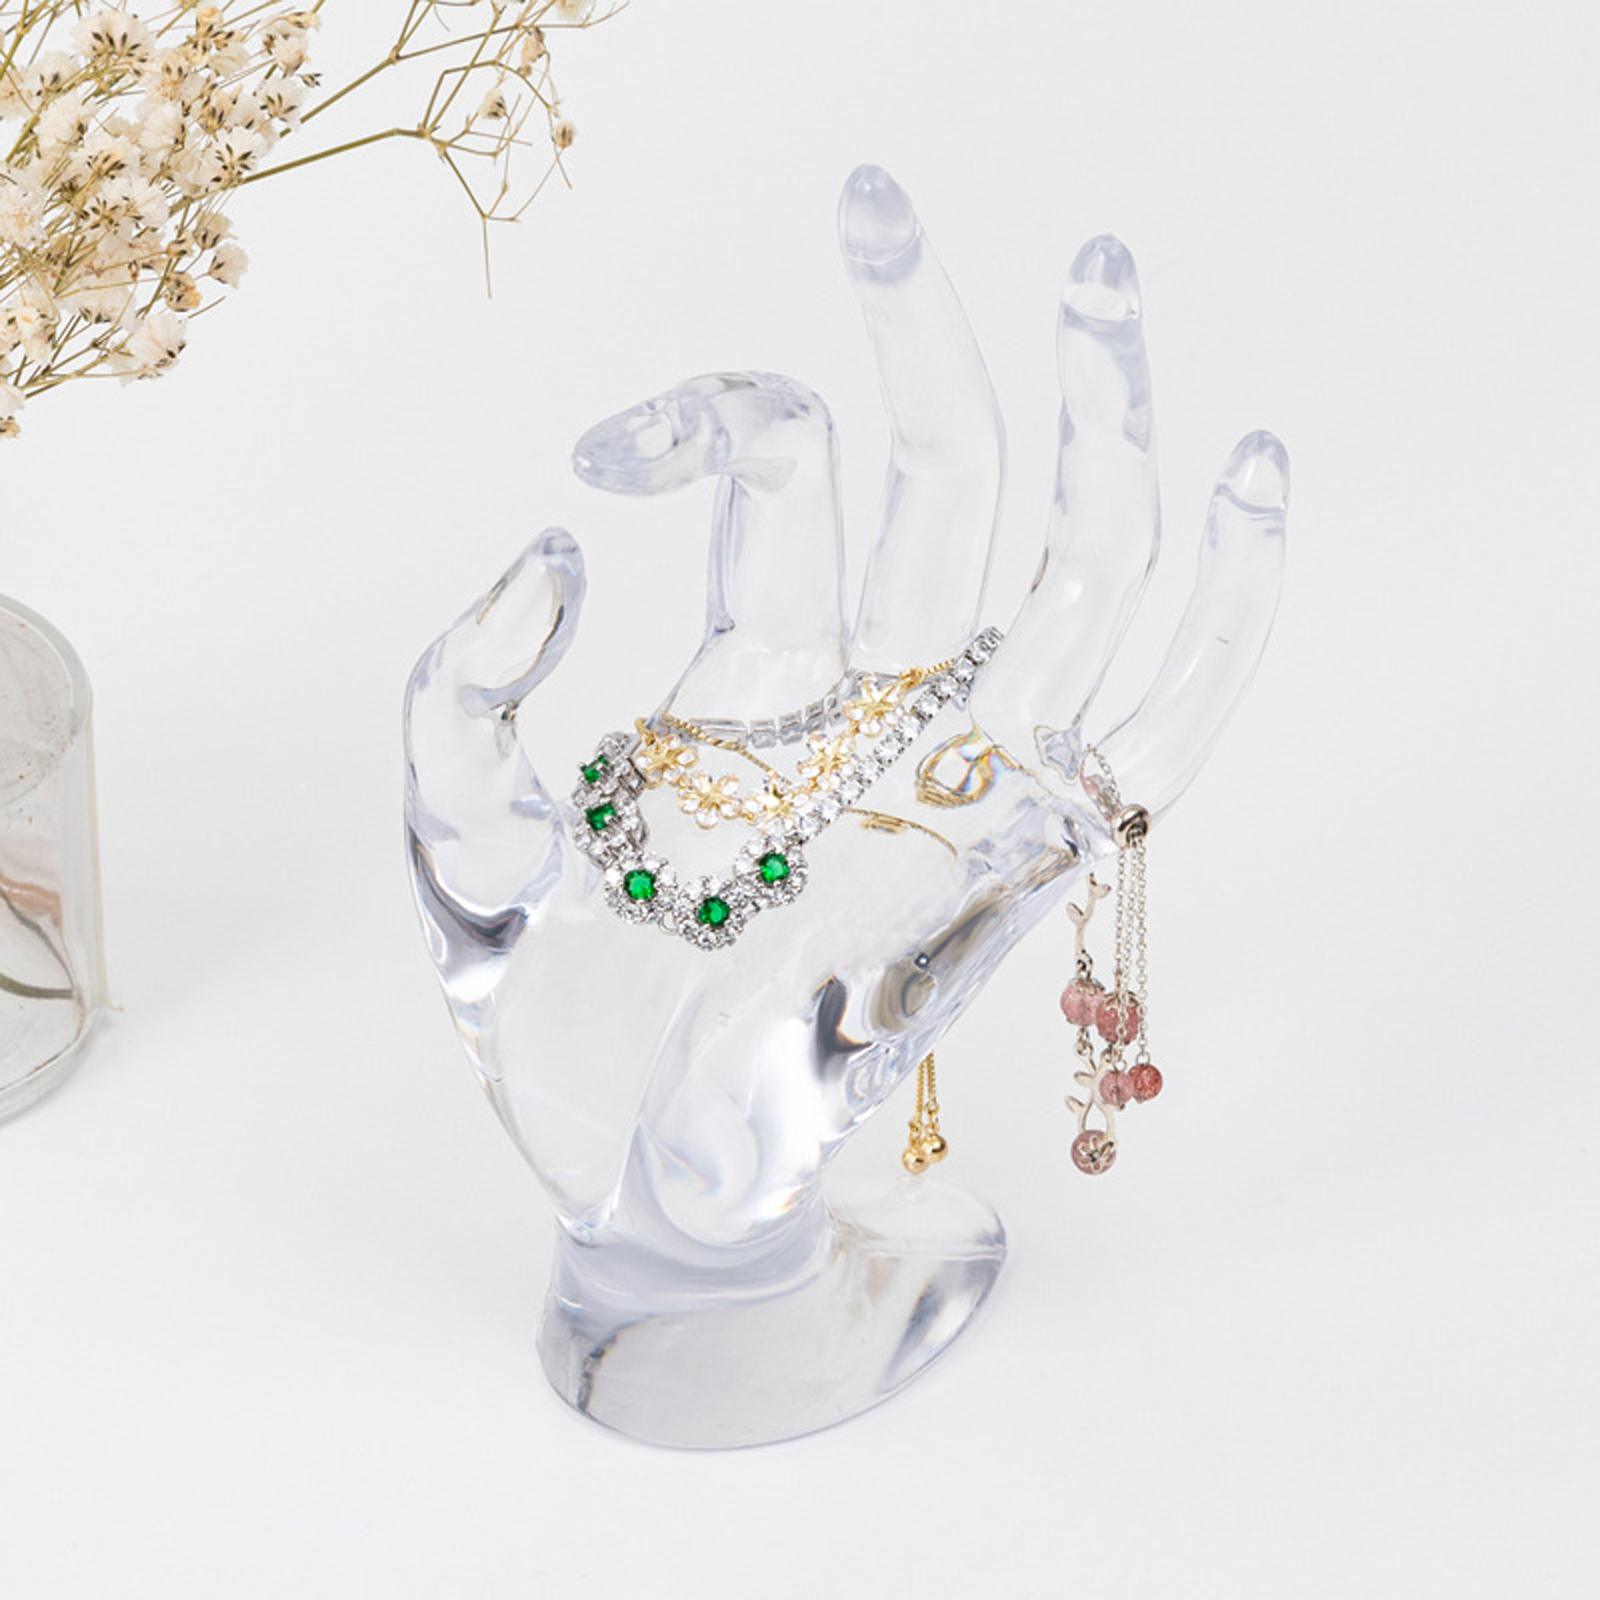 Ring Necklace Jewelry Storage Display Holder Hand Shape Dresser